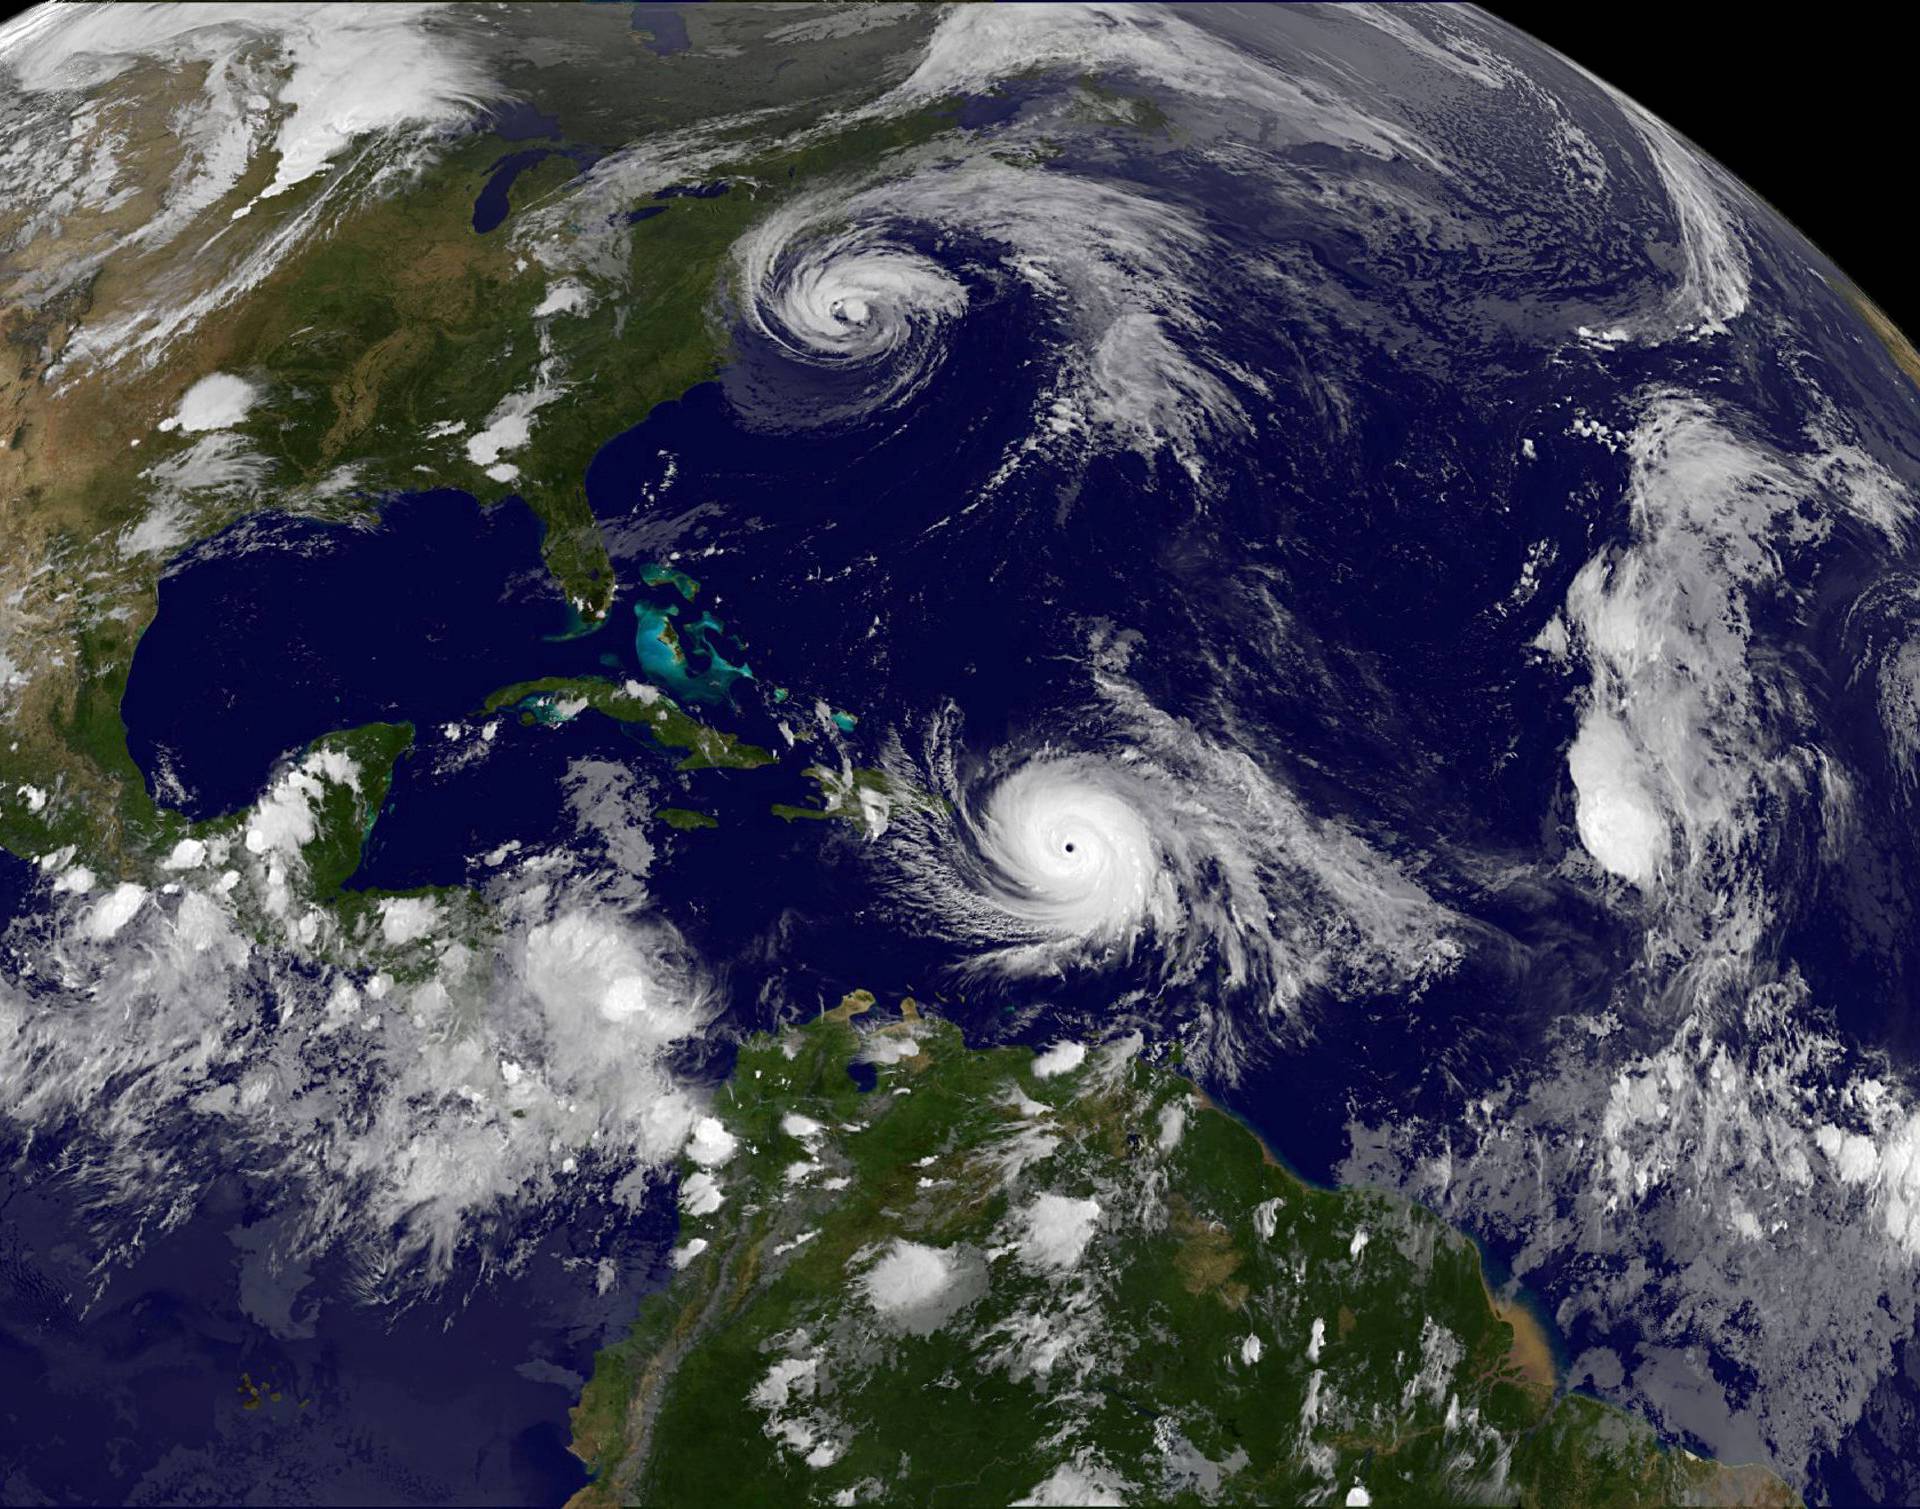 NOAA's GOES East satellite image of Hurricane Maria and Hurricane Jose in the Atlantic Ocean